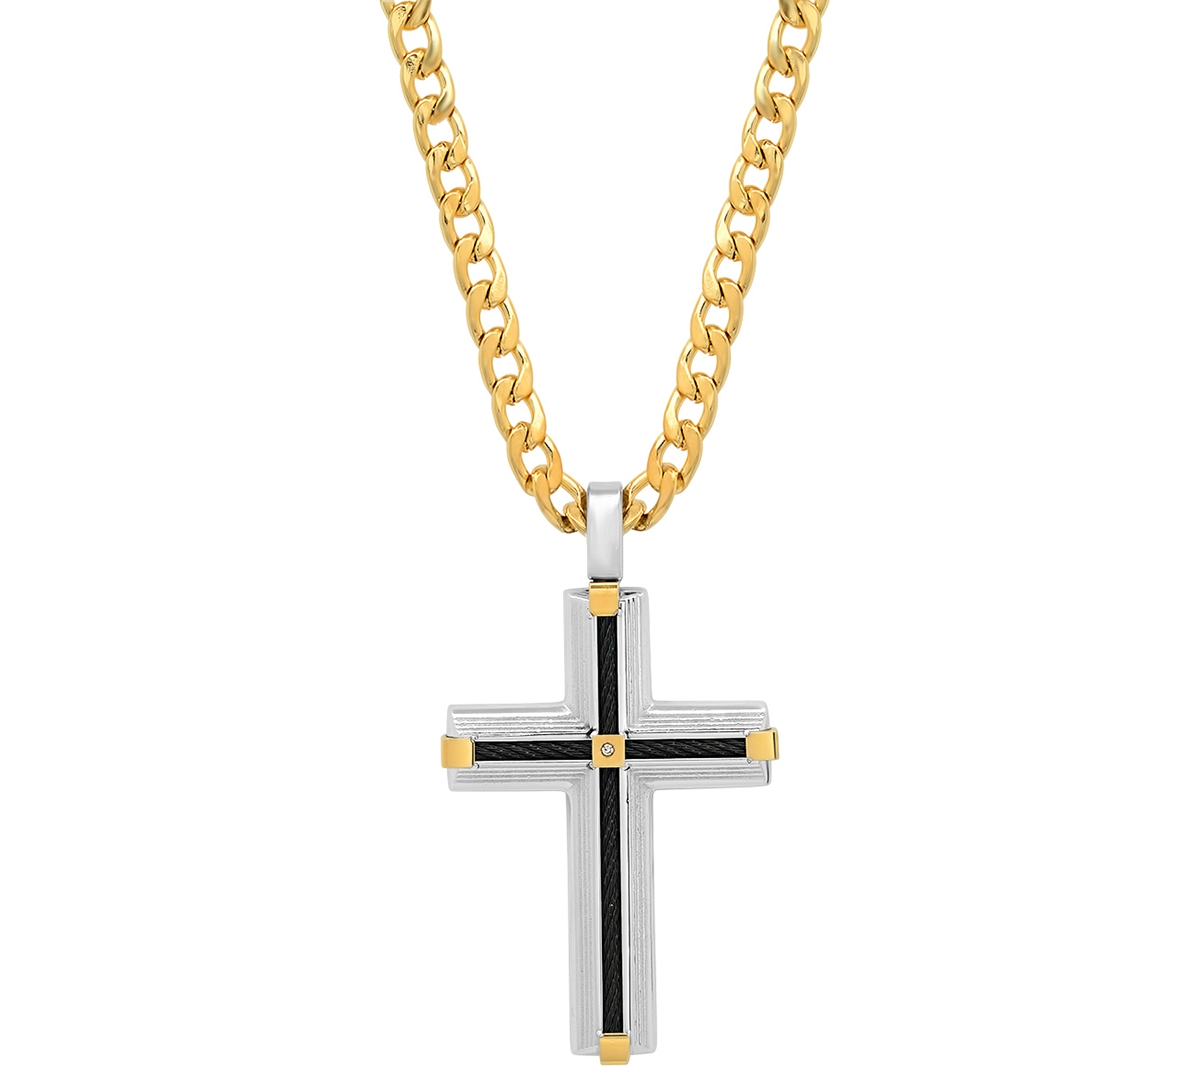 Men's 18K Gold Plated Tri-Tone Cross Pendant Necklace, 24" - Black, Gold, Silver